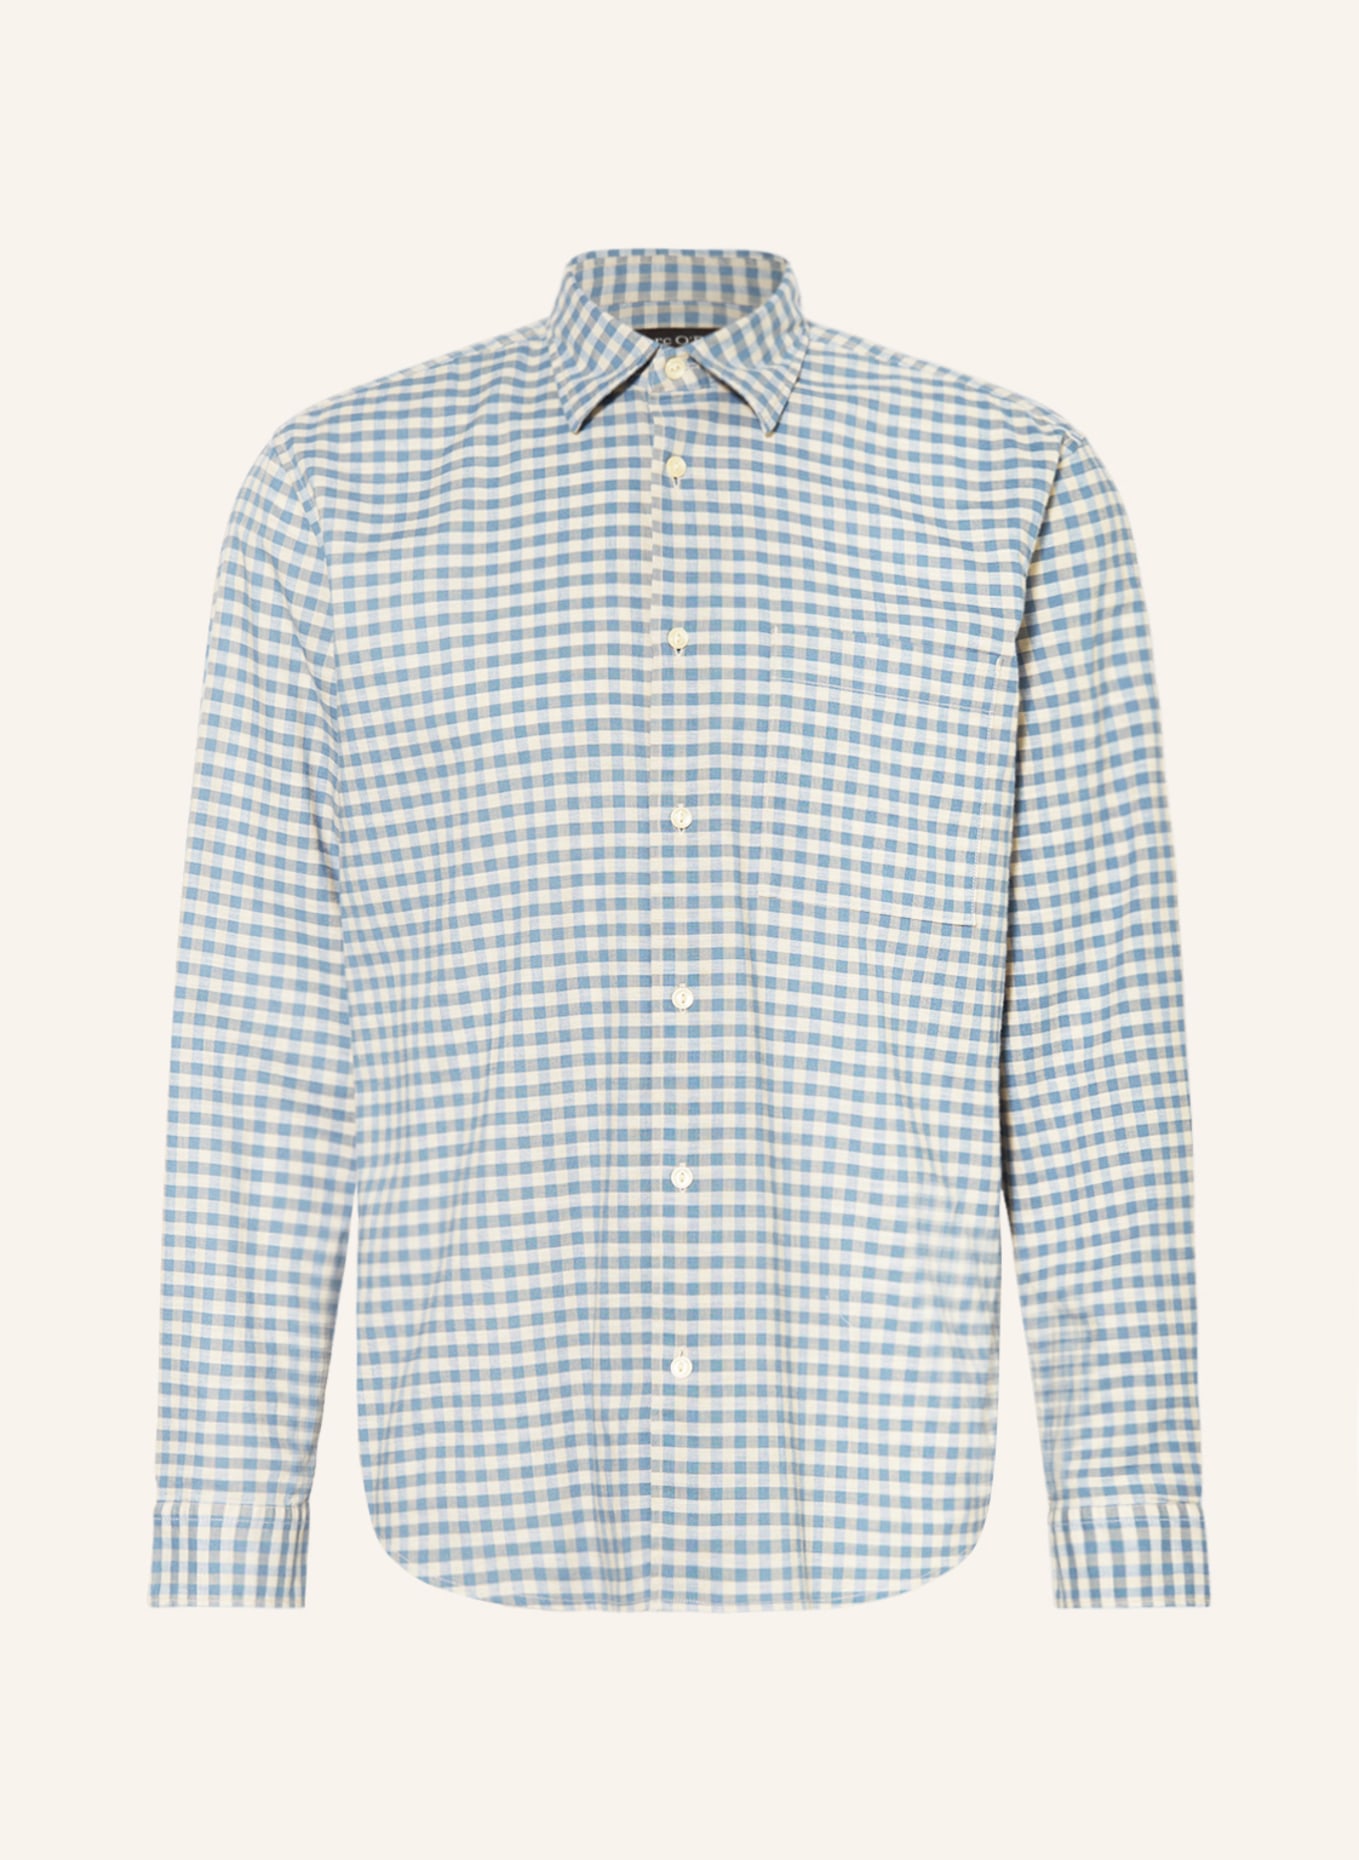 Marc O'Polo Shirt regular fit, Color: LIGHT BLUE/ WHITE/ BLUE GRAY (Image 1)